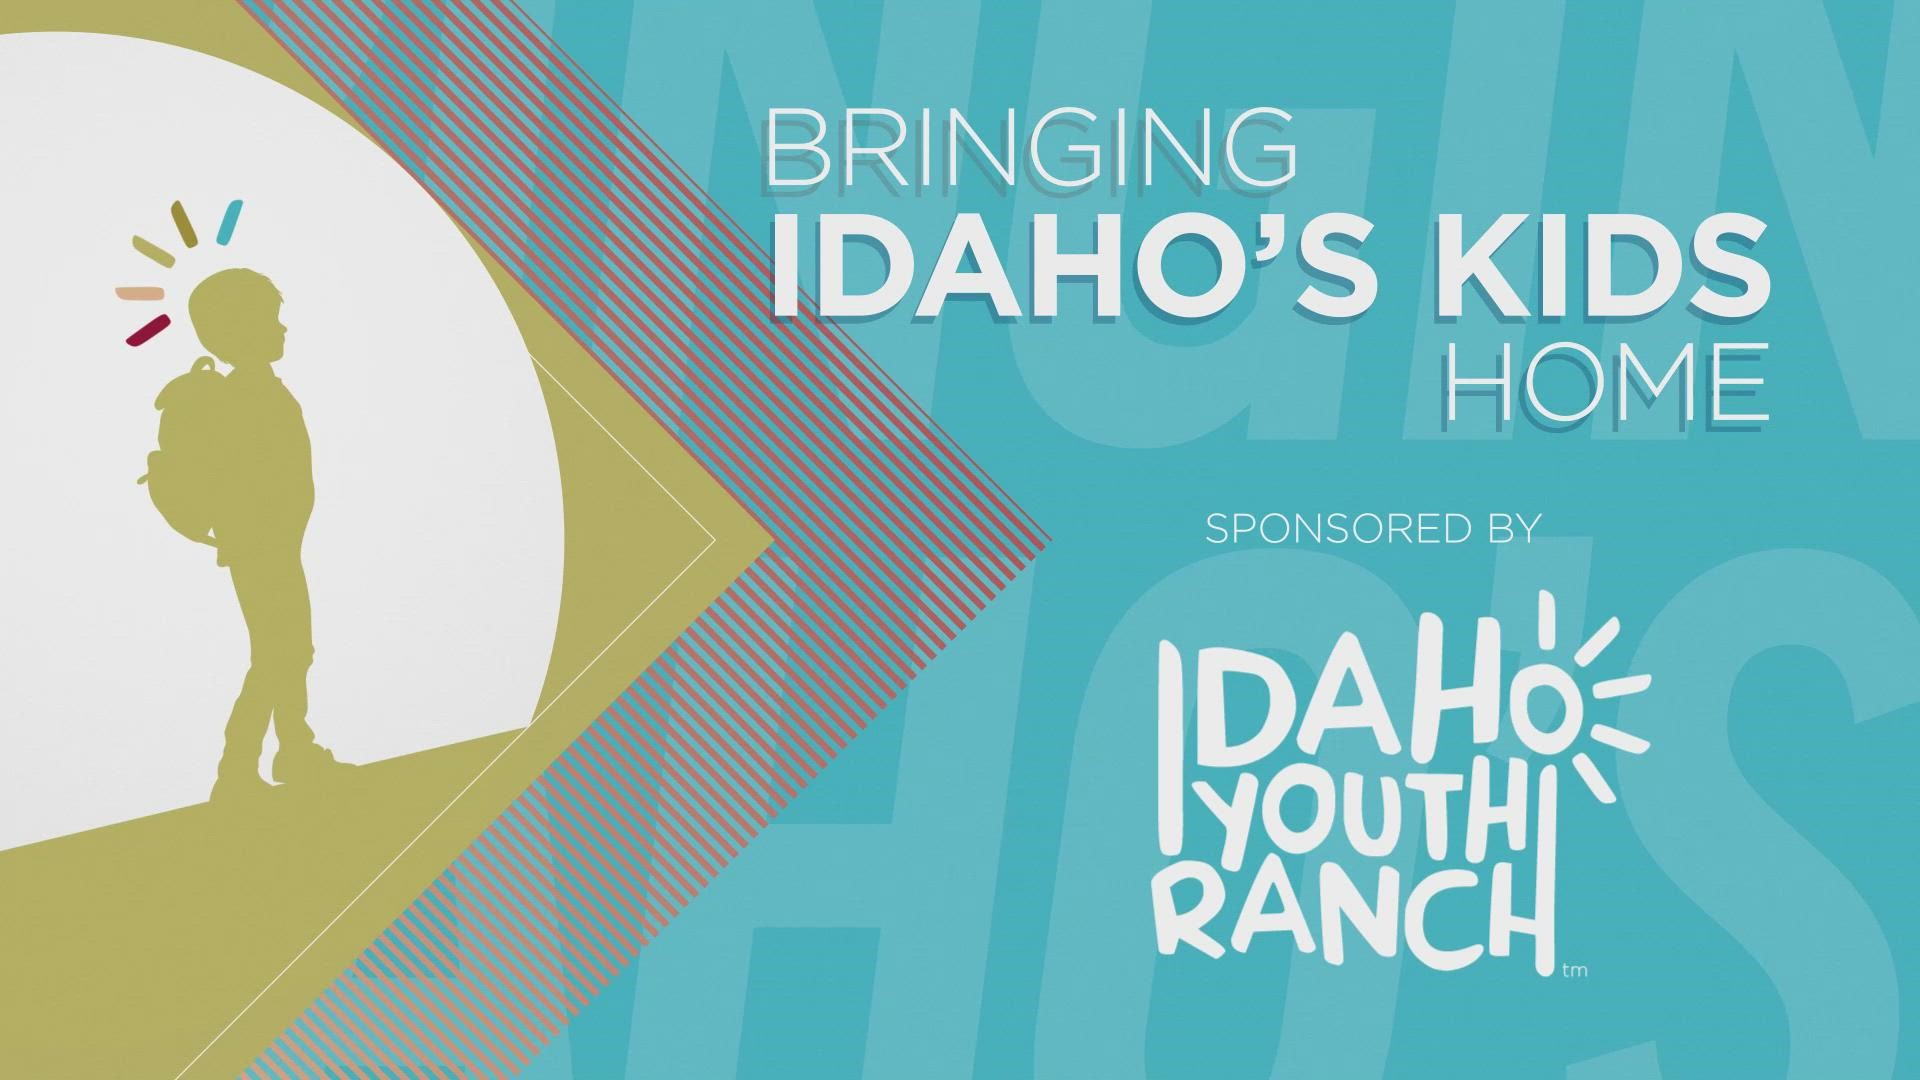 Sponsored by Idaho Youth Ranch. New Residential Center for Healing & Resilience by Idaho Youth Ranch in Middleton, Idaho. www.bringidahoskidshome.org